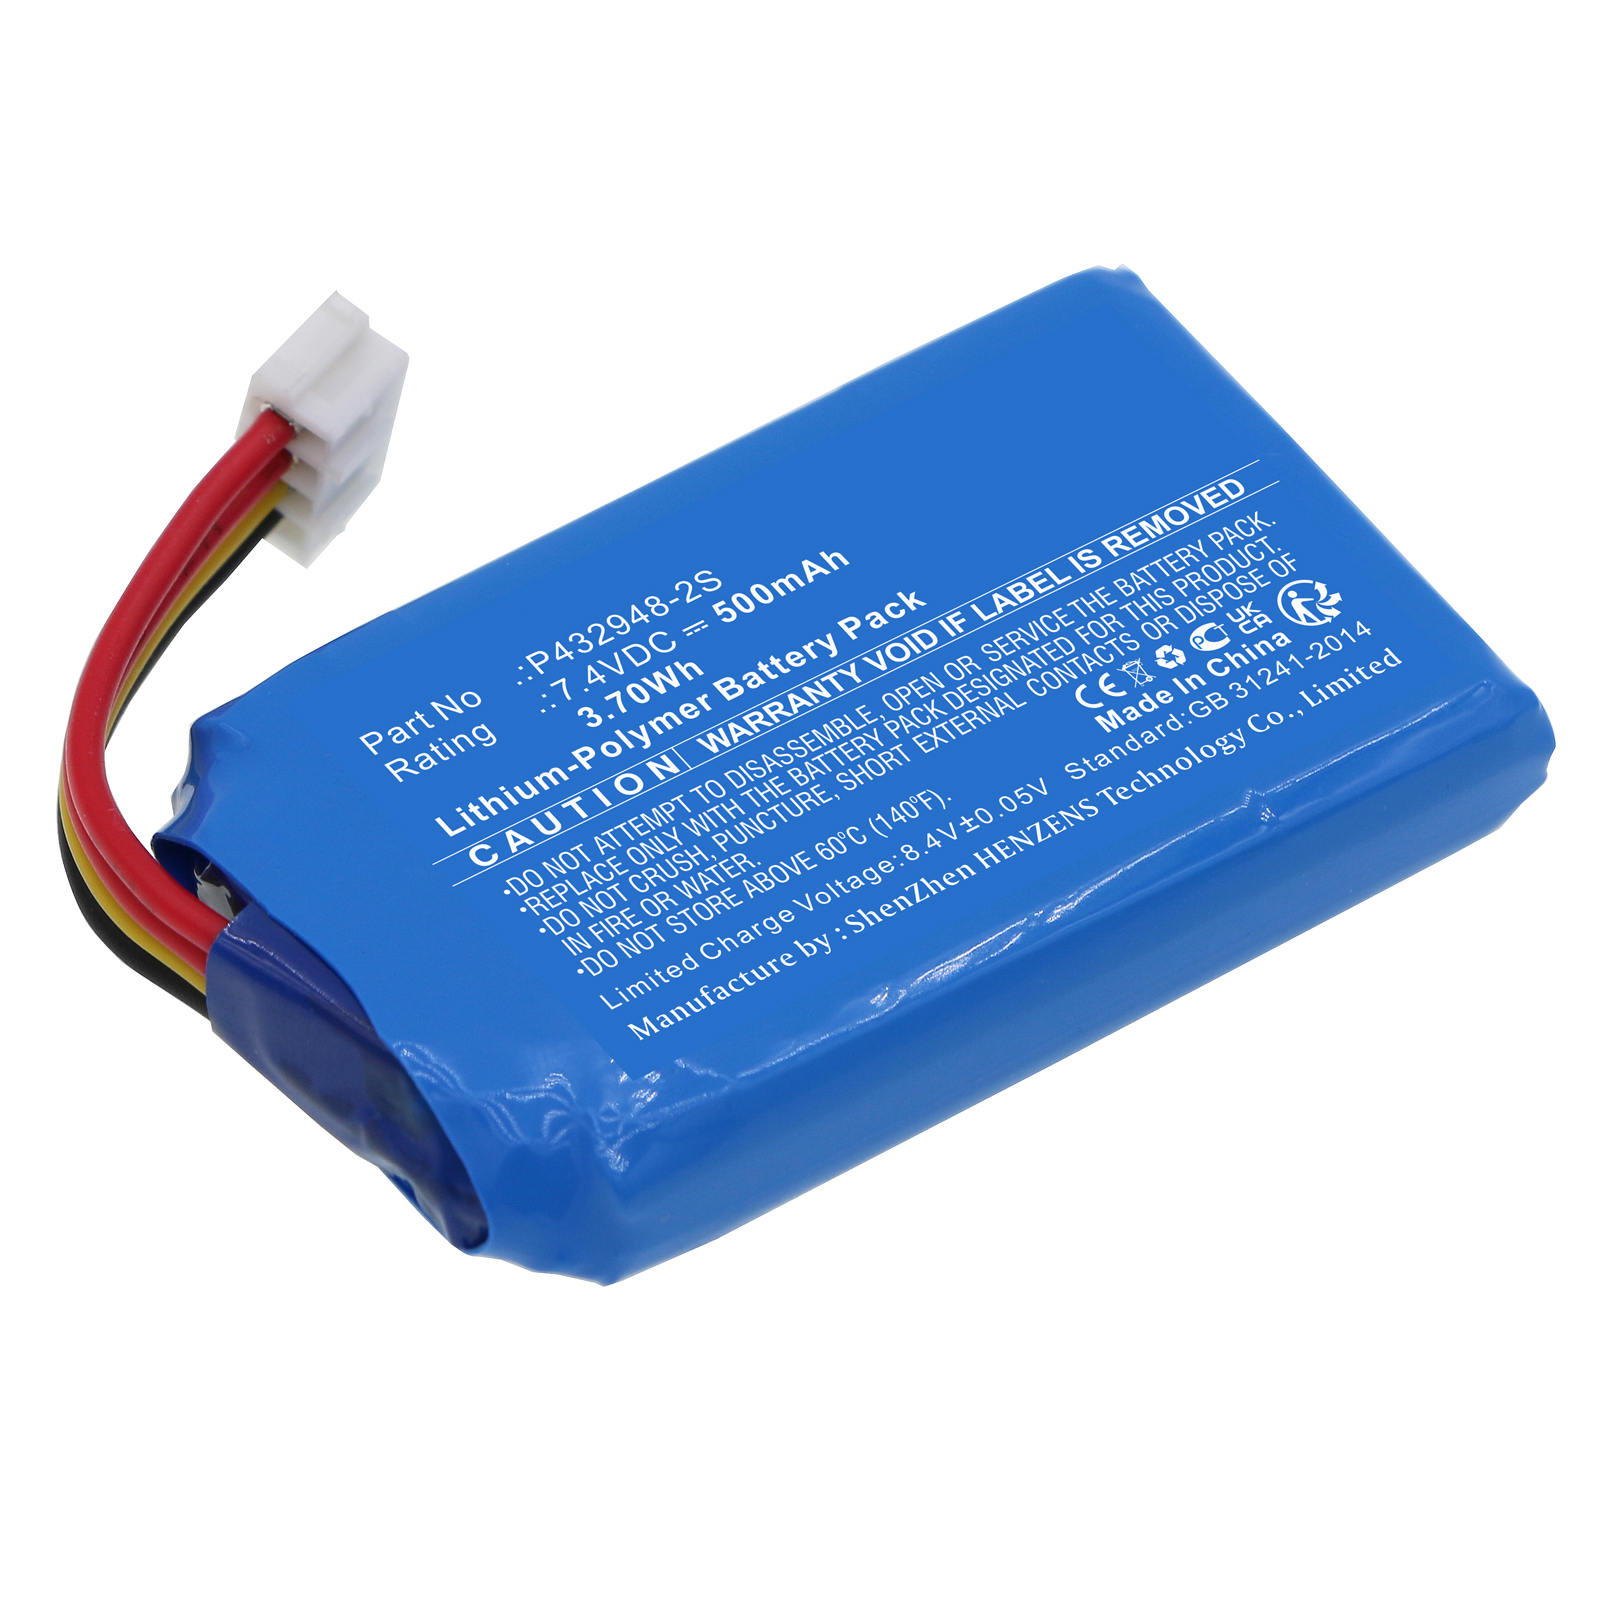 Synergy Digital Printer Battery, Compatible with LG P432948-2S Printer Battery (Li-Pol, 7.4V, 500mAh)